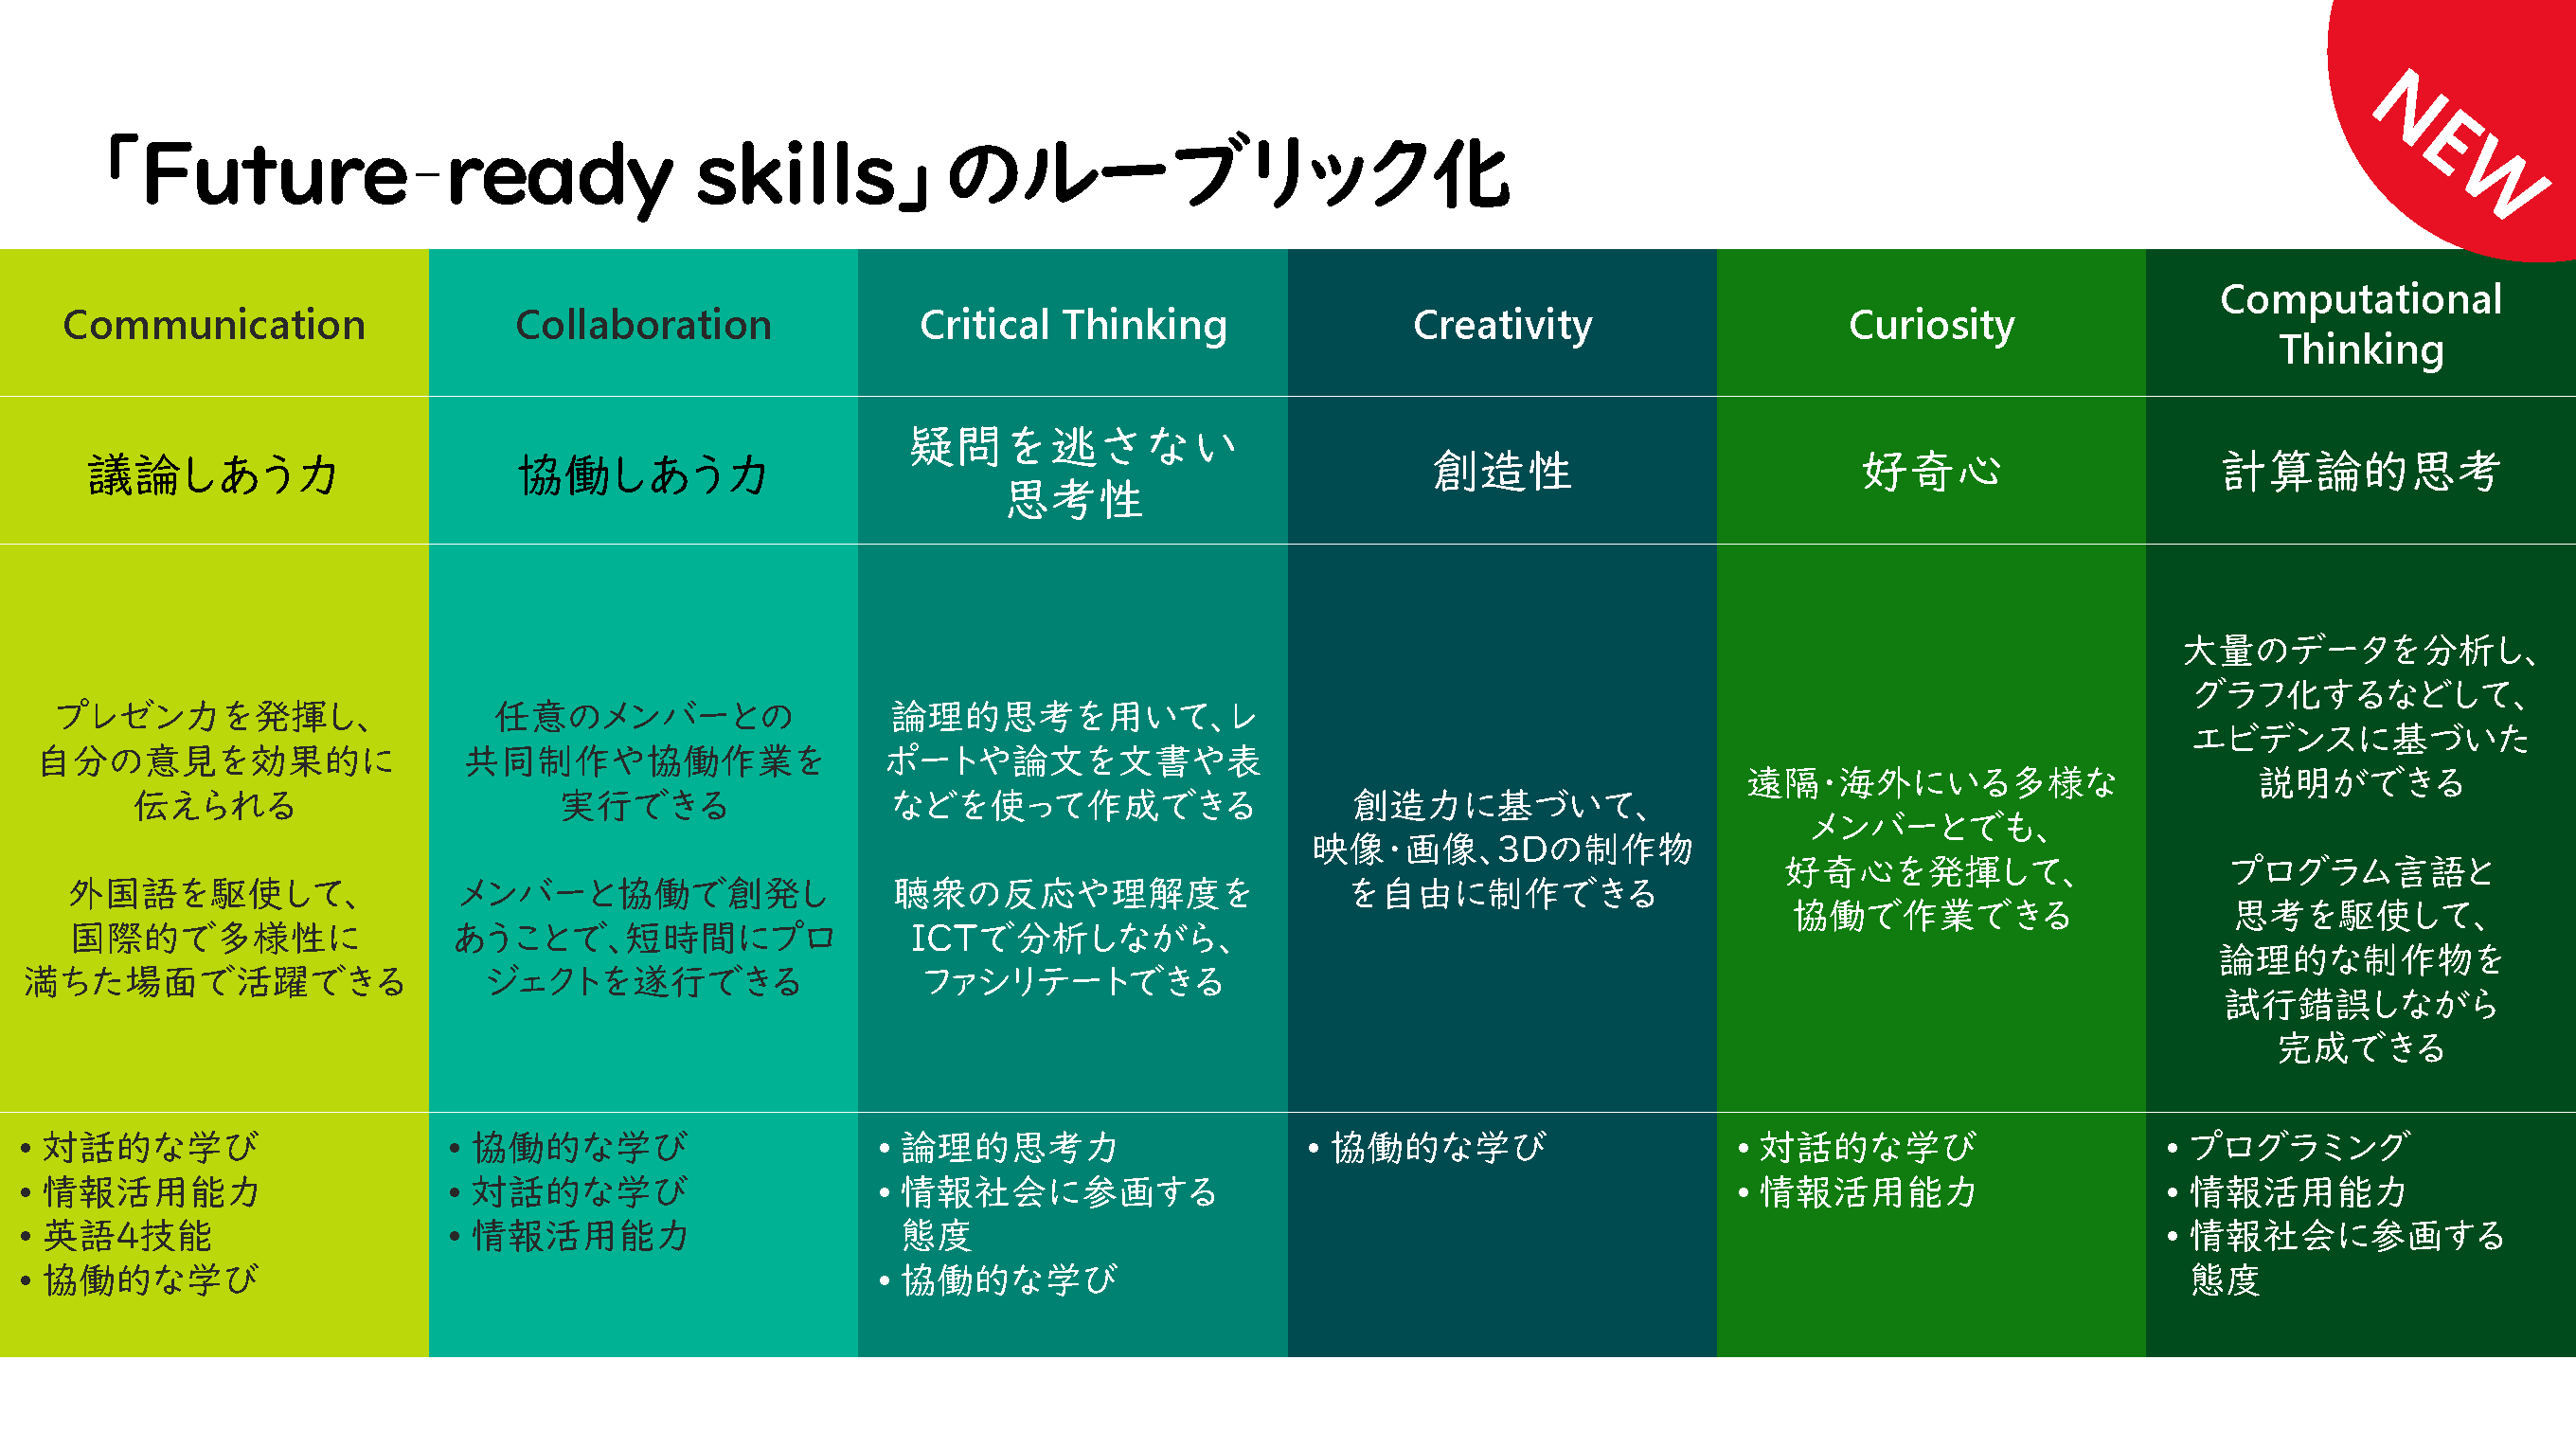 「Future-ready skills」のルーブリック化